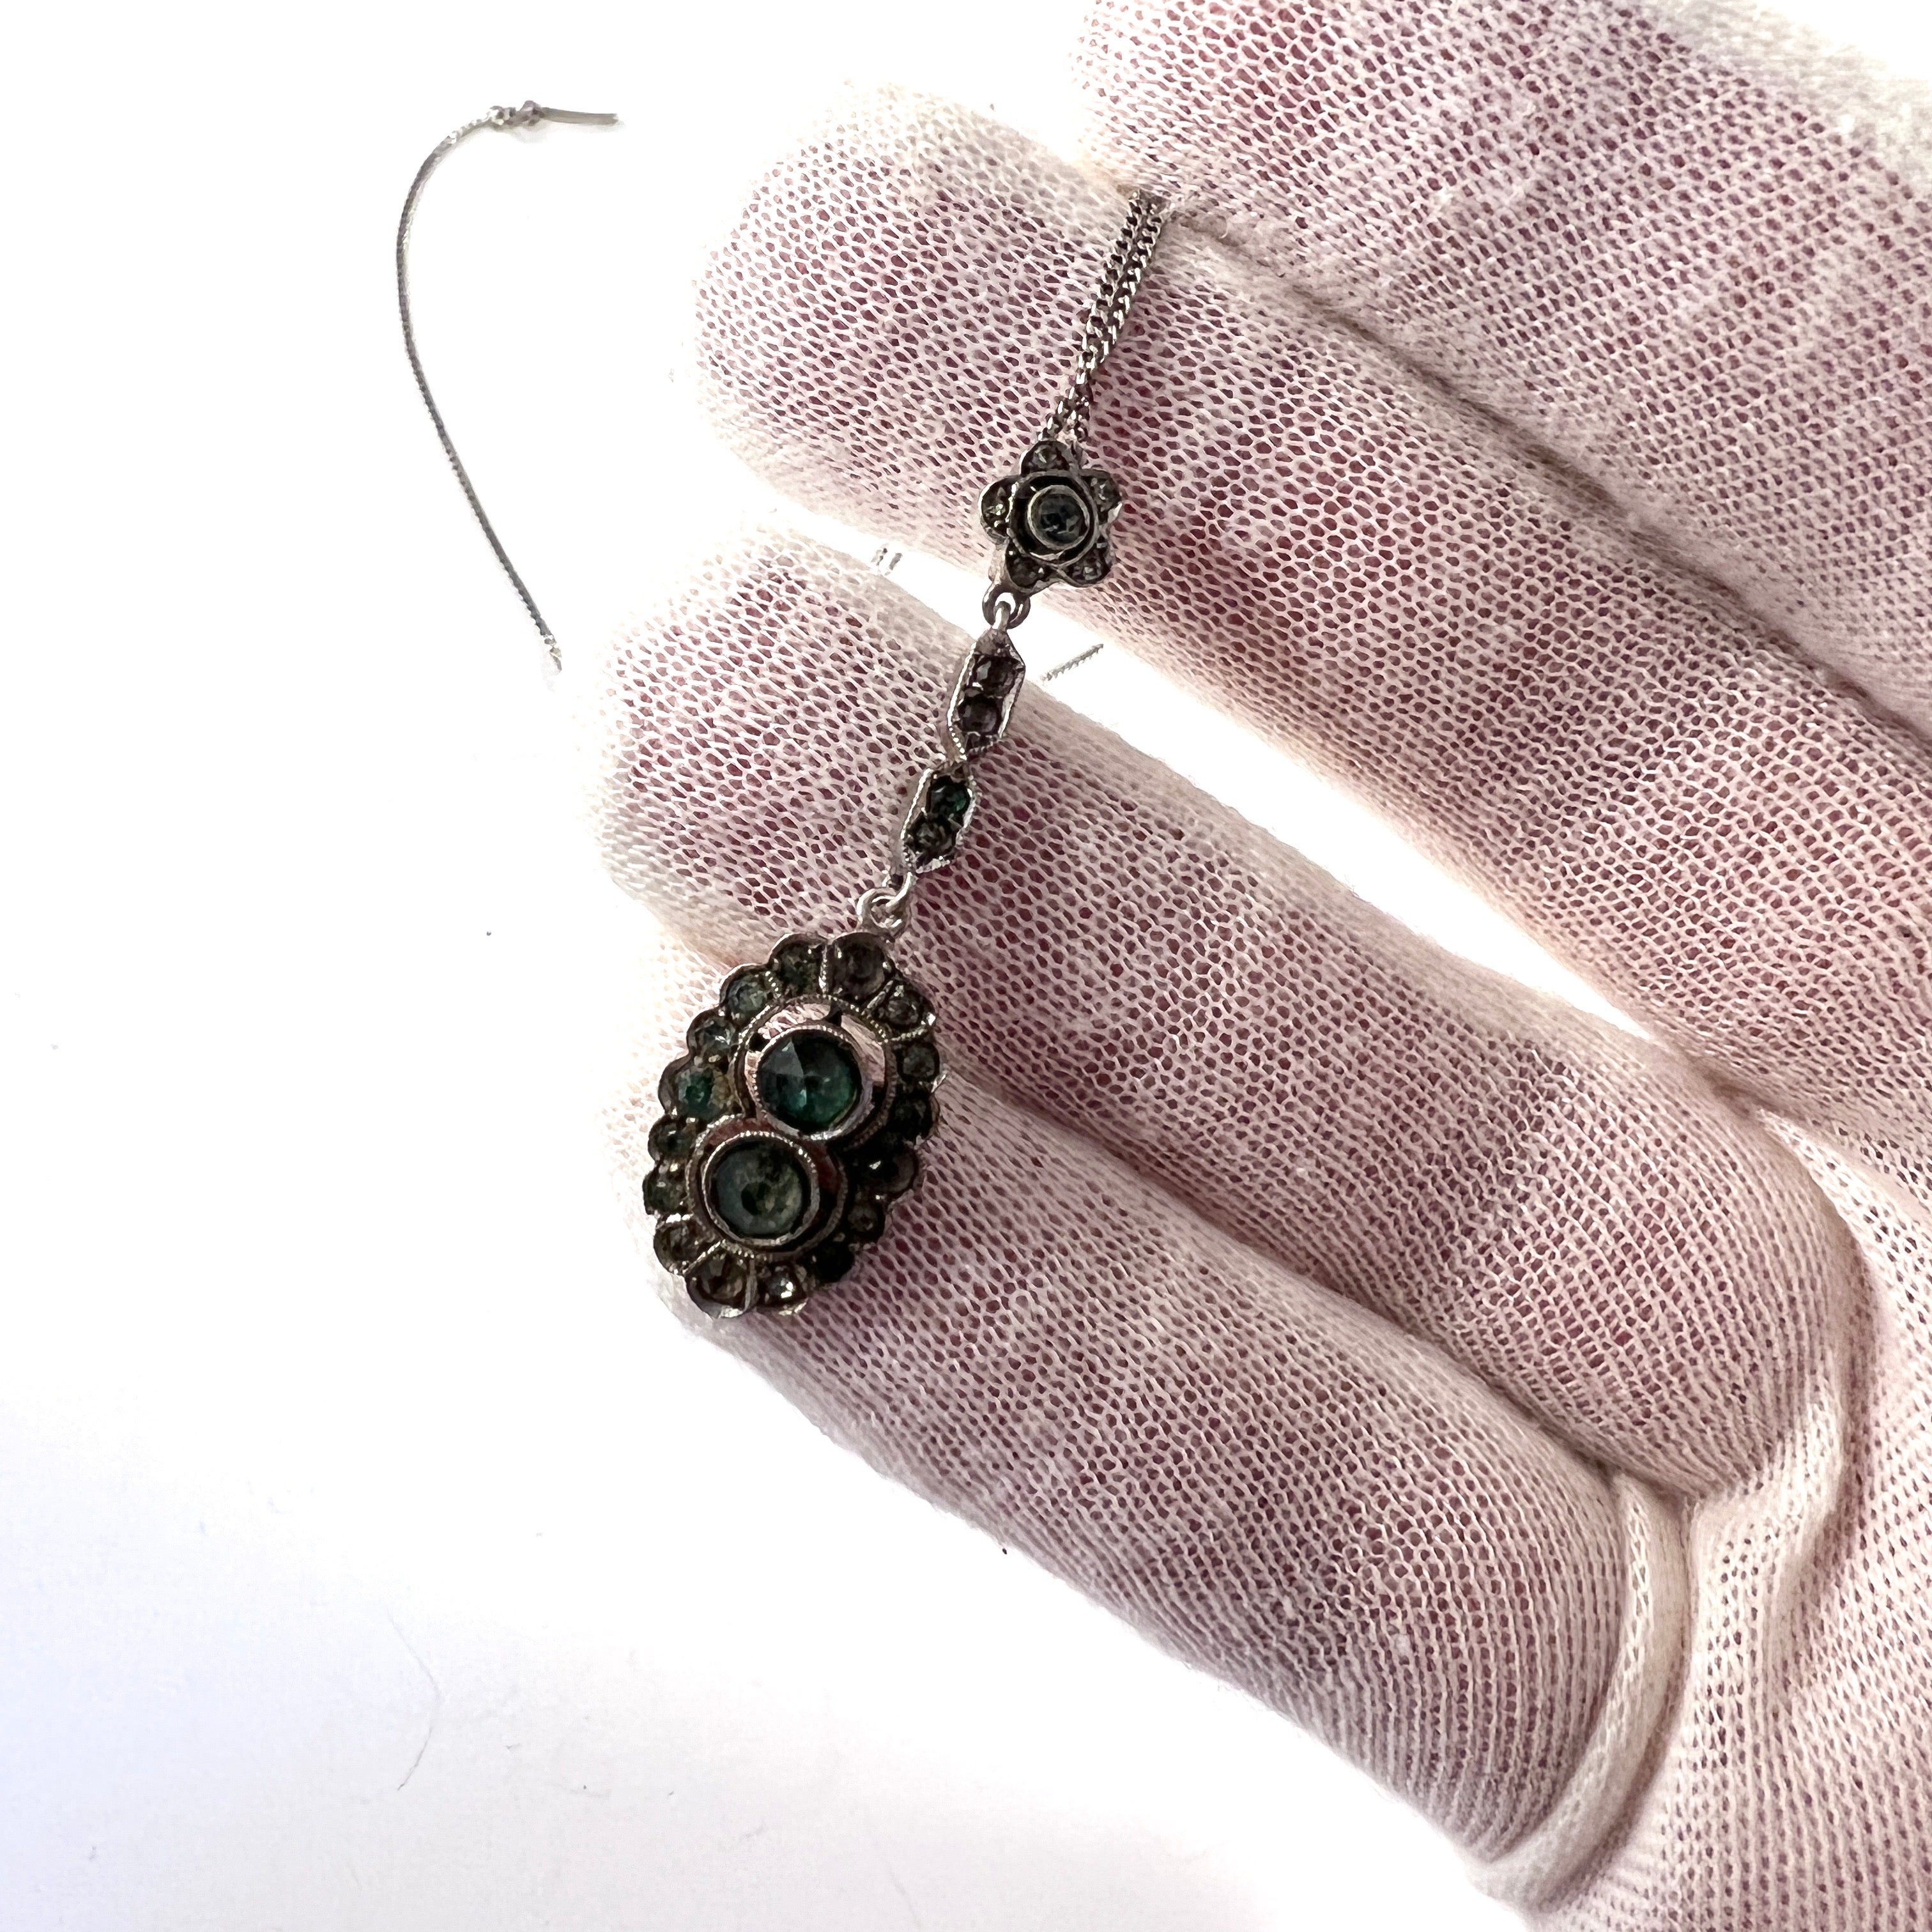 Antique c 1920 Solid 835 Silver Green Paste Stone Pendant Necklace.